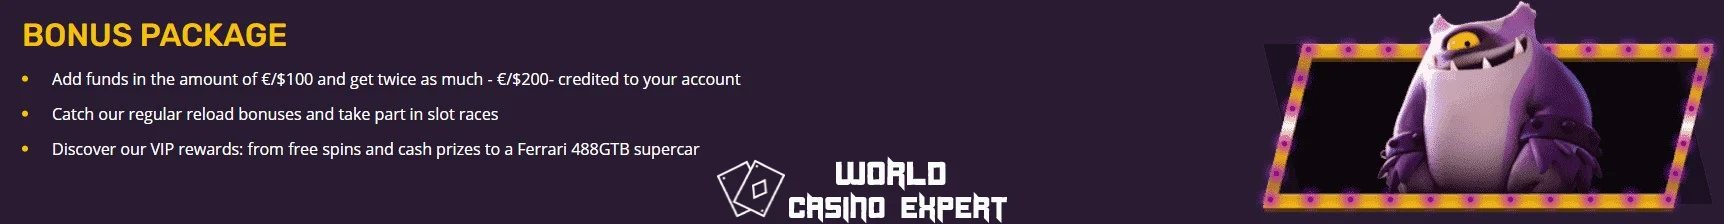 Bonuses from Online Casino Playamo | World Casino Expert